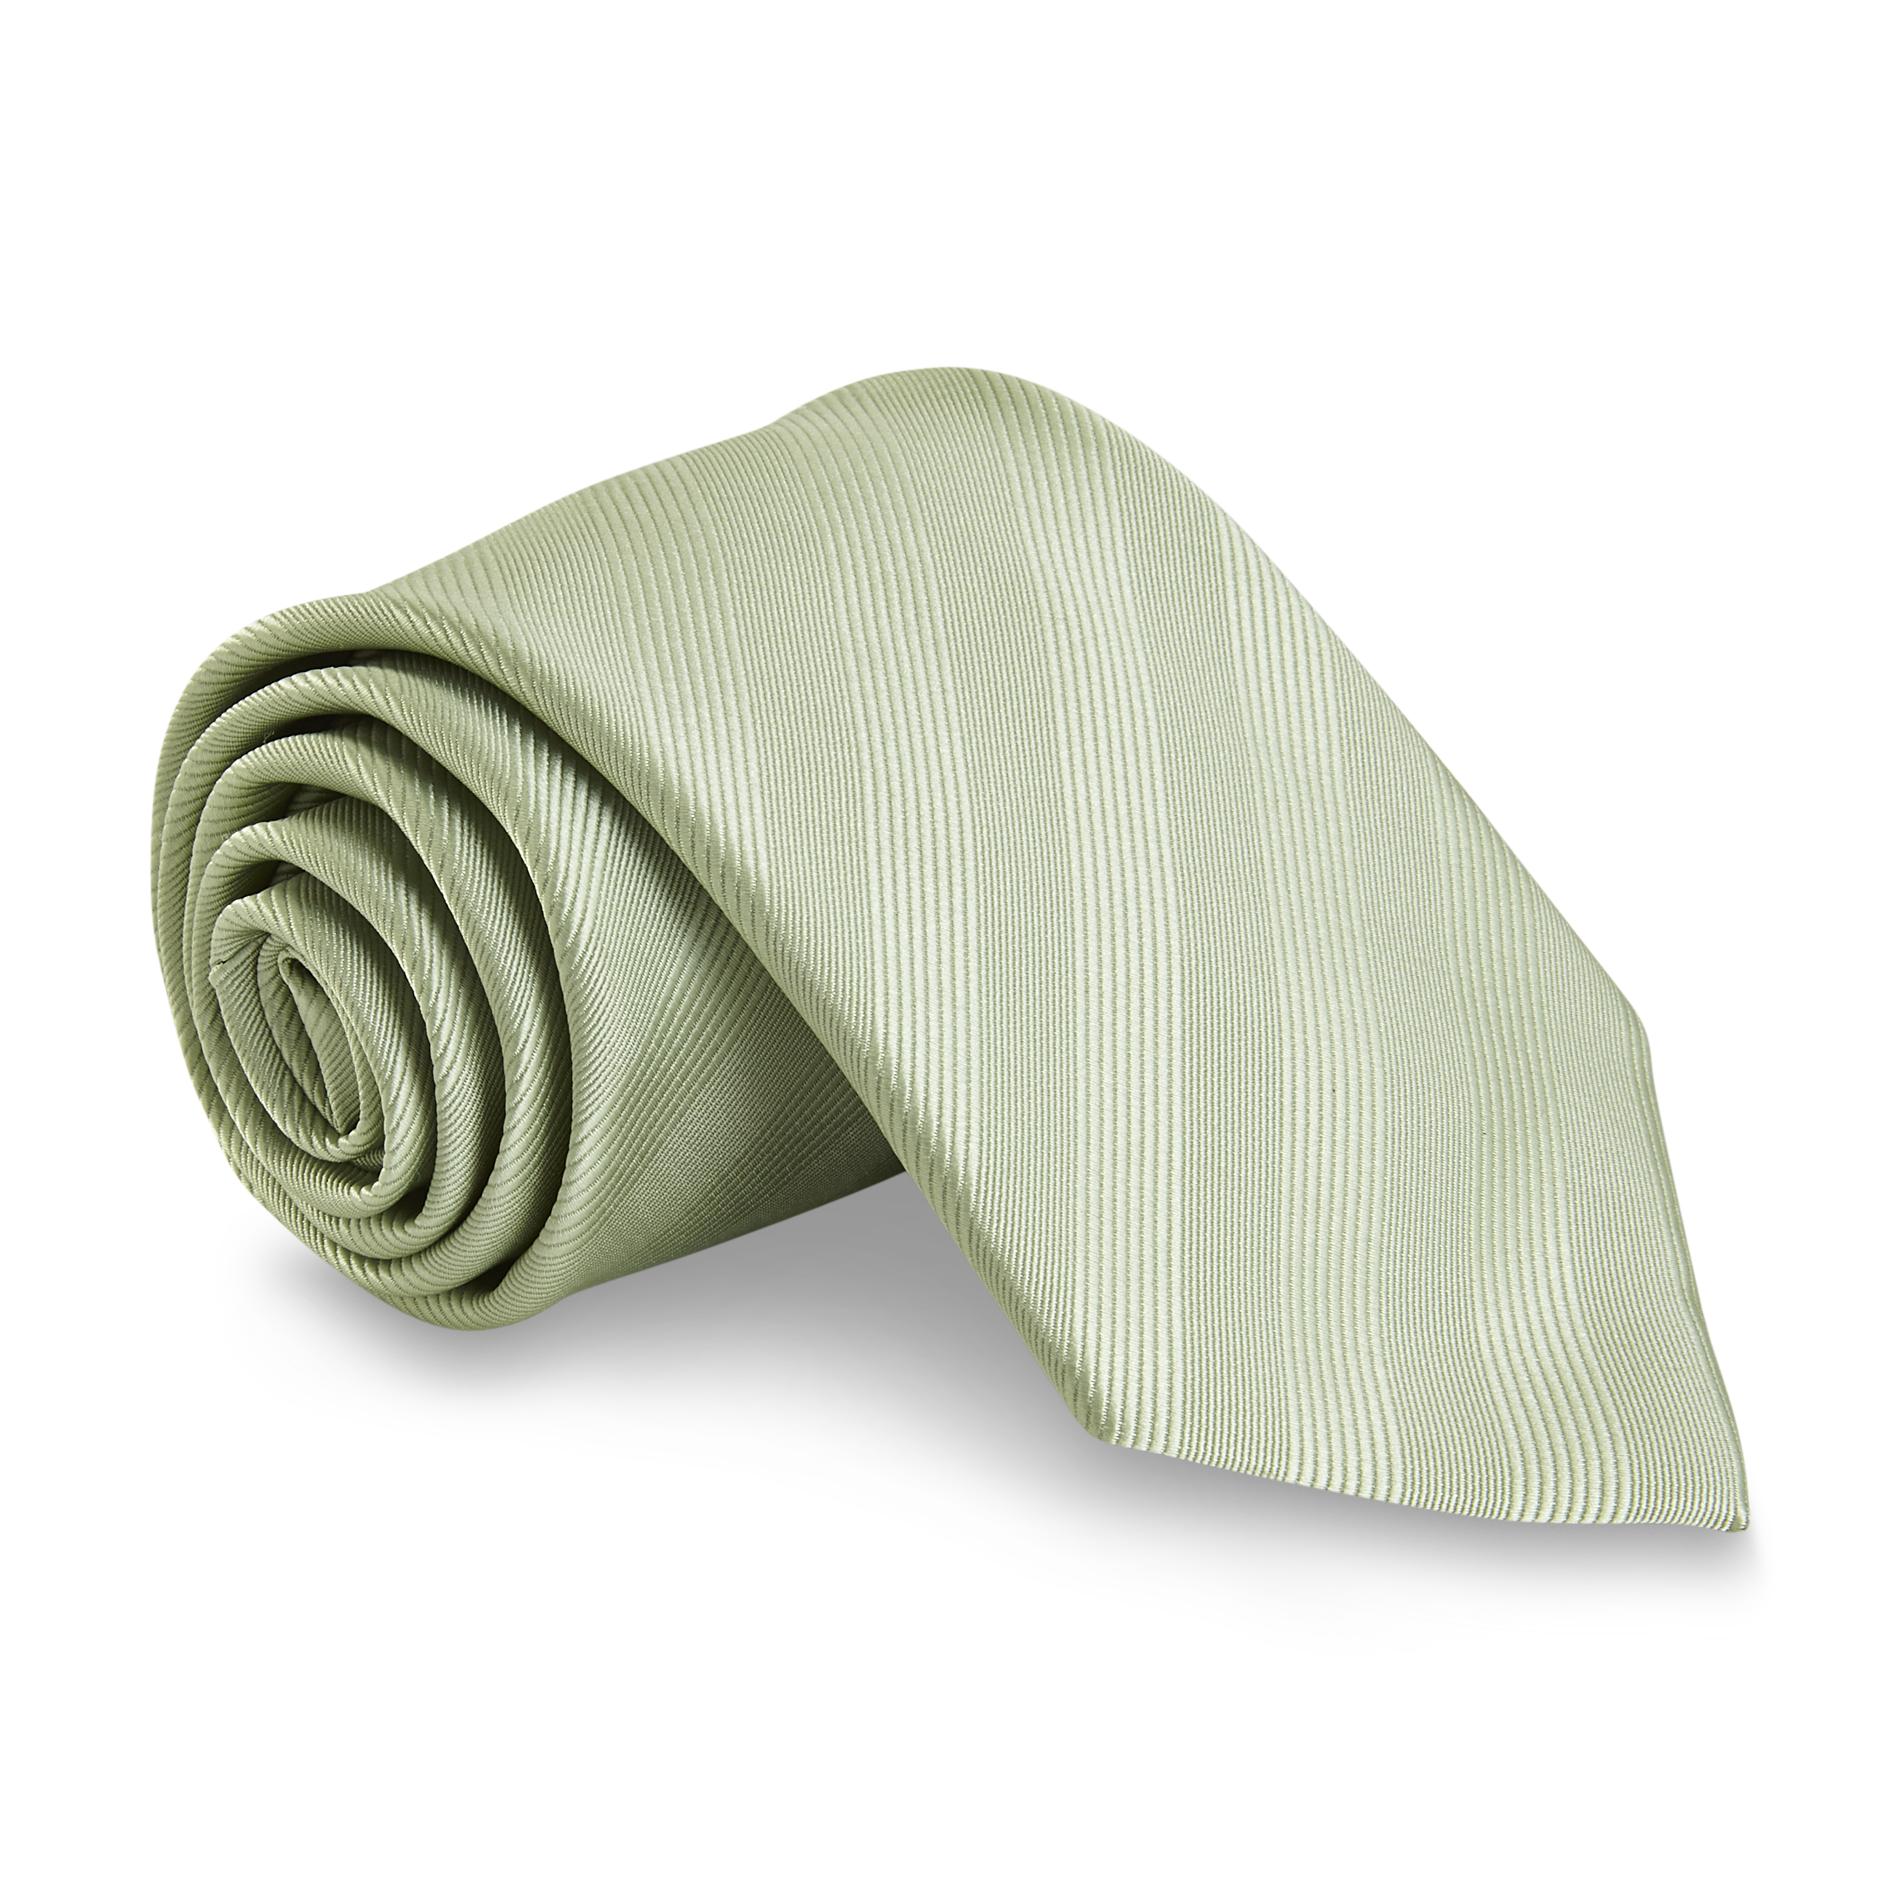 David Taylor Collection Men's Necktie - Tonal Striped